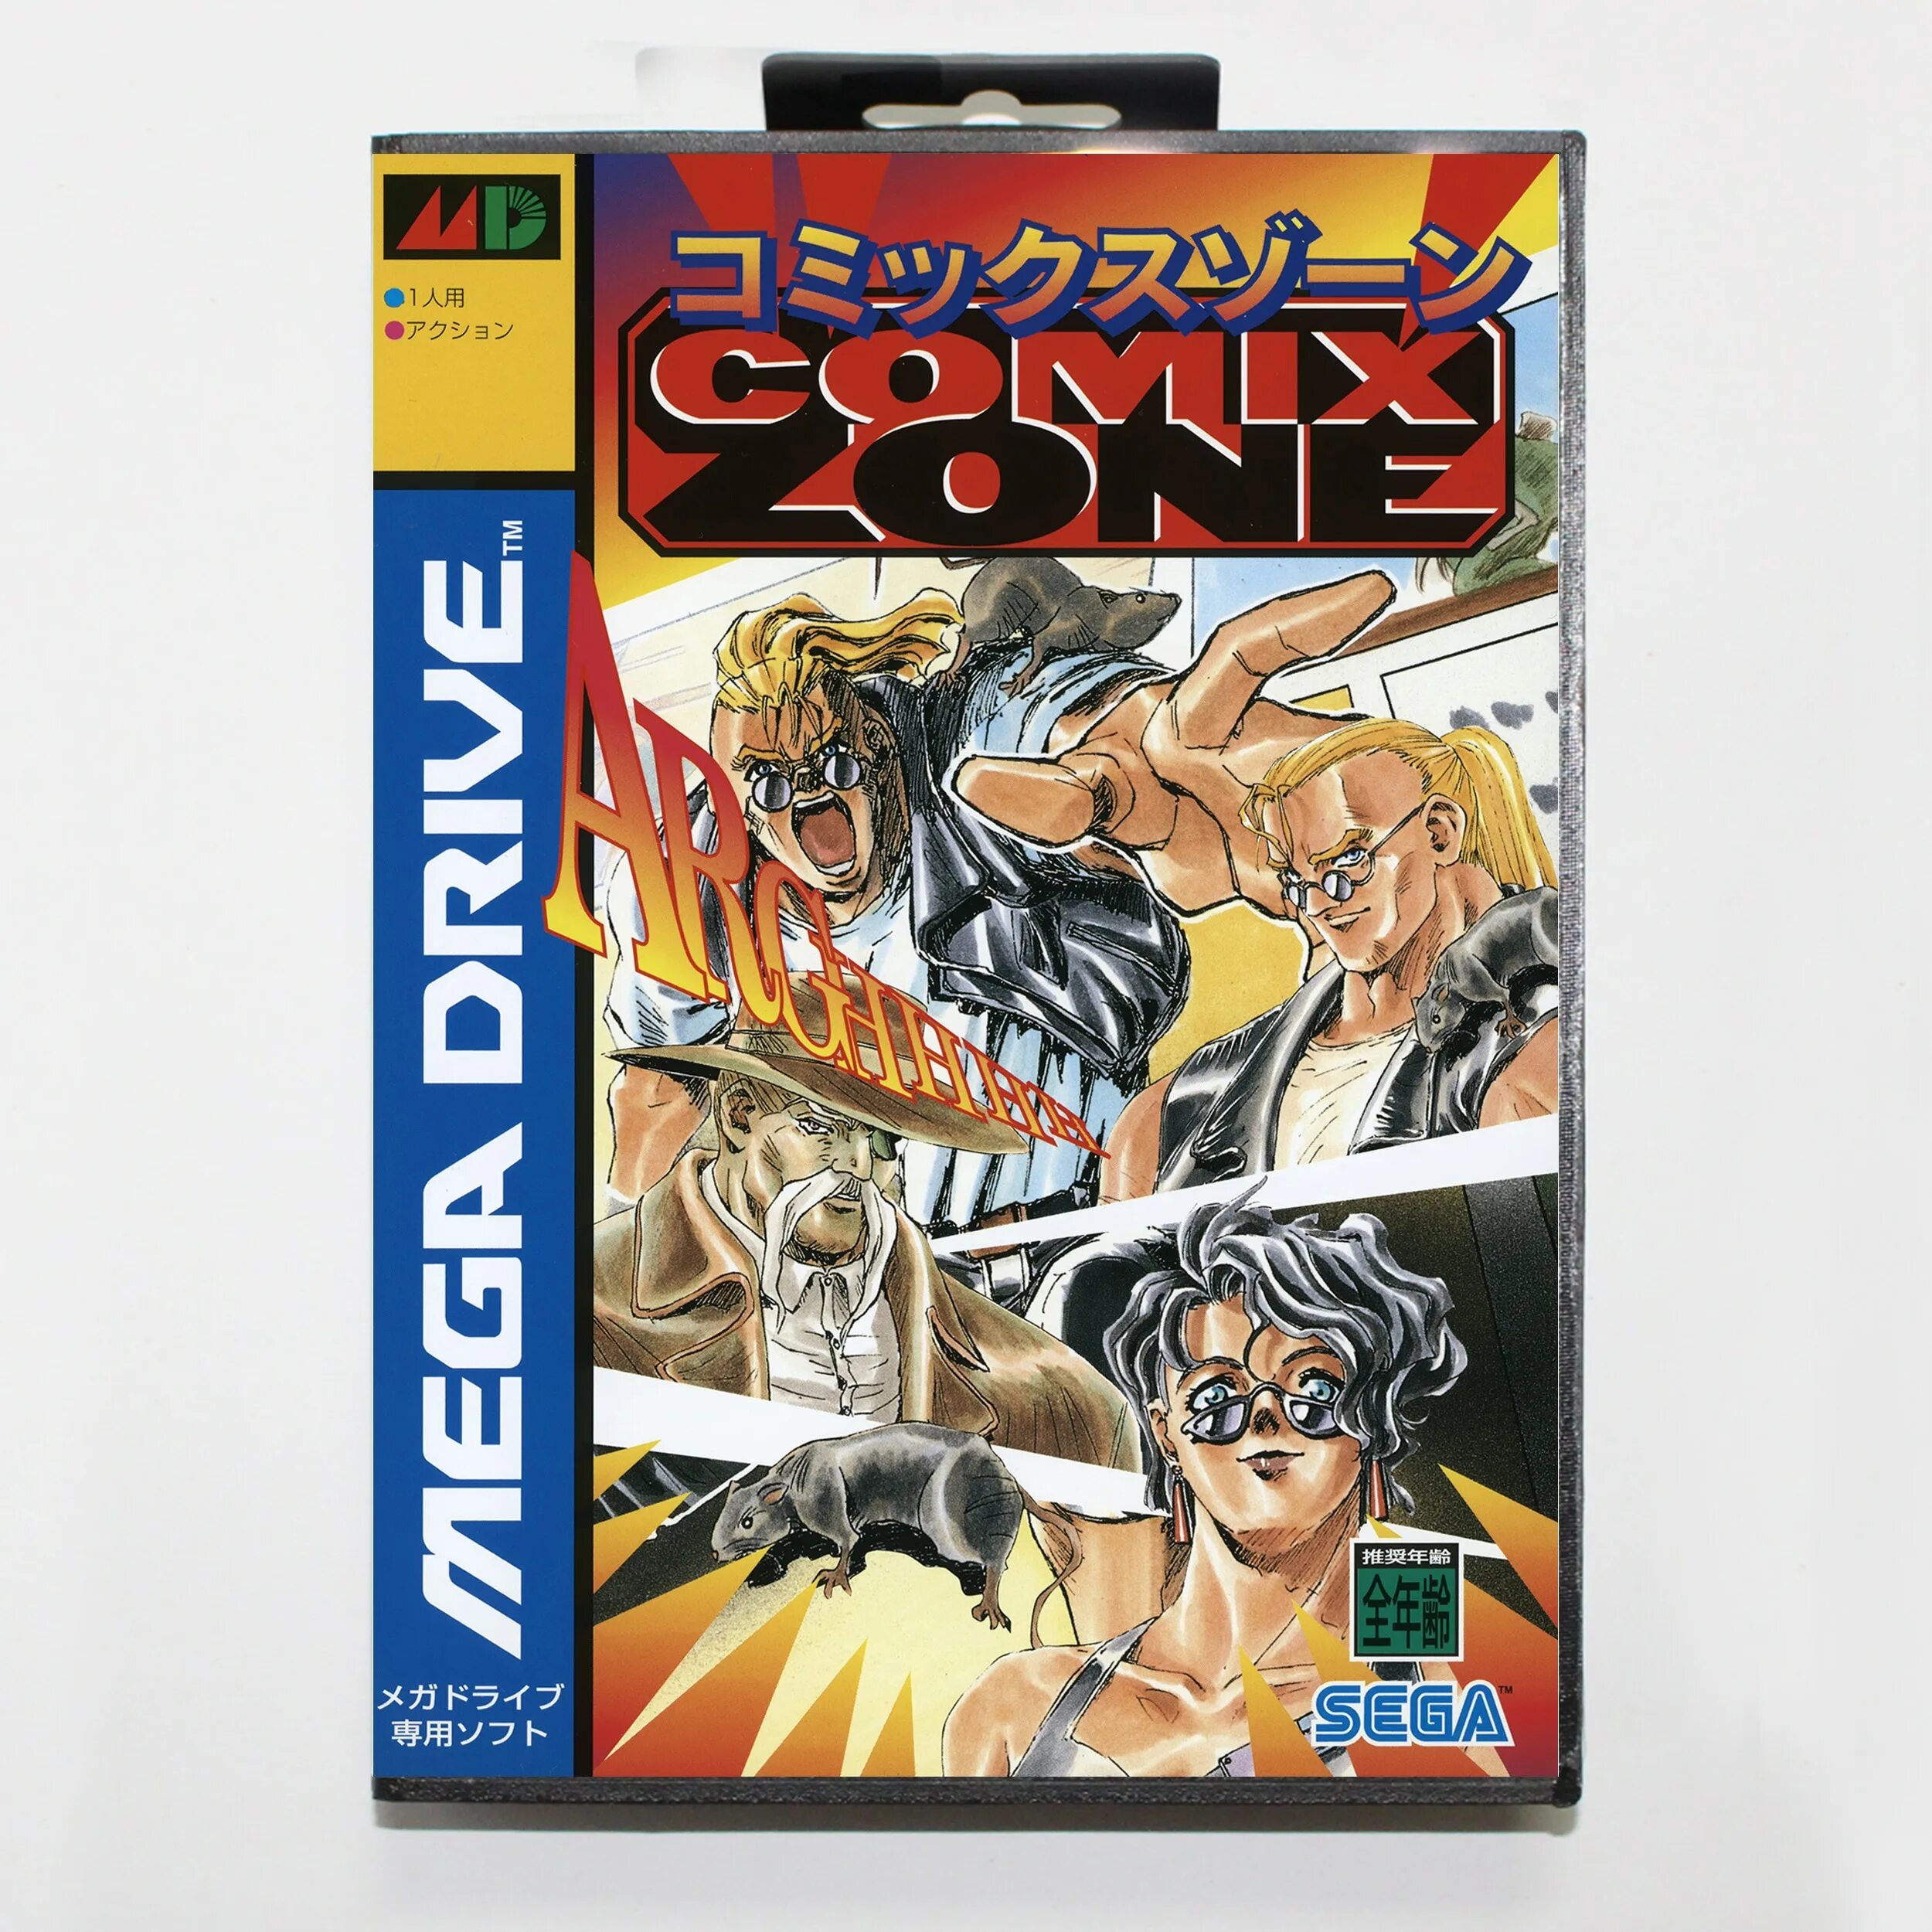 Comics Zone игра. Sega Mega Drive comix Zone. Комикс зон сега обложка. Обложка для игры Sega comix Zone. Игра на сега комикс